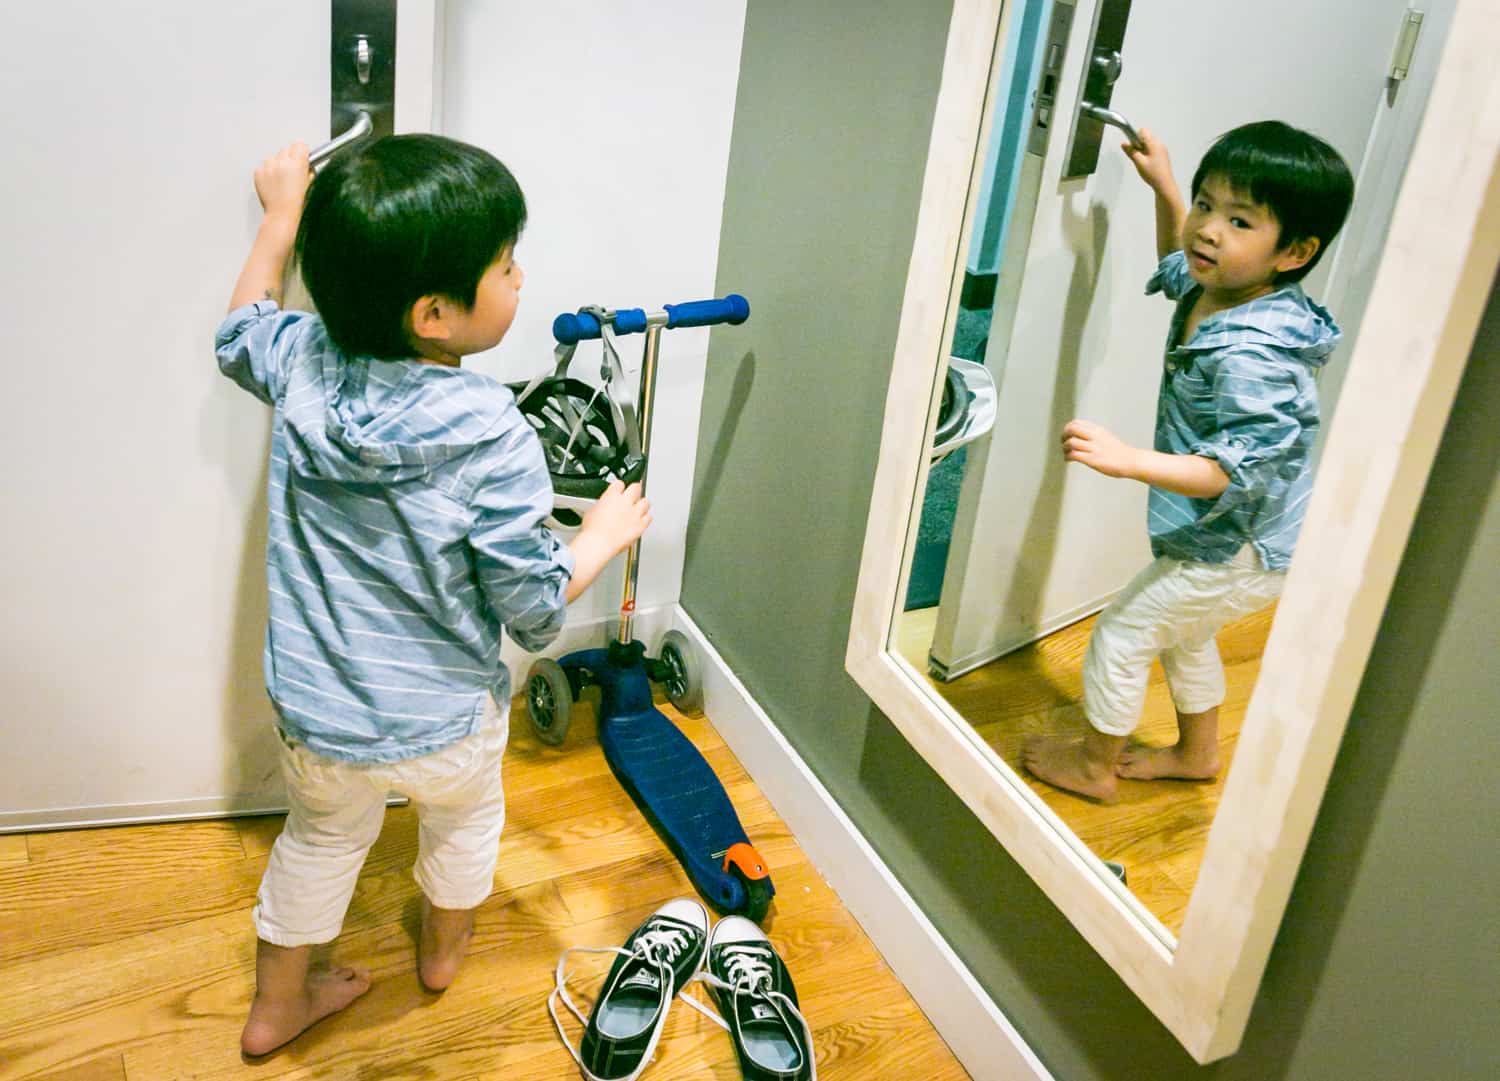 Little boy opening door and reflected in mirror